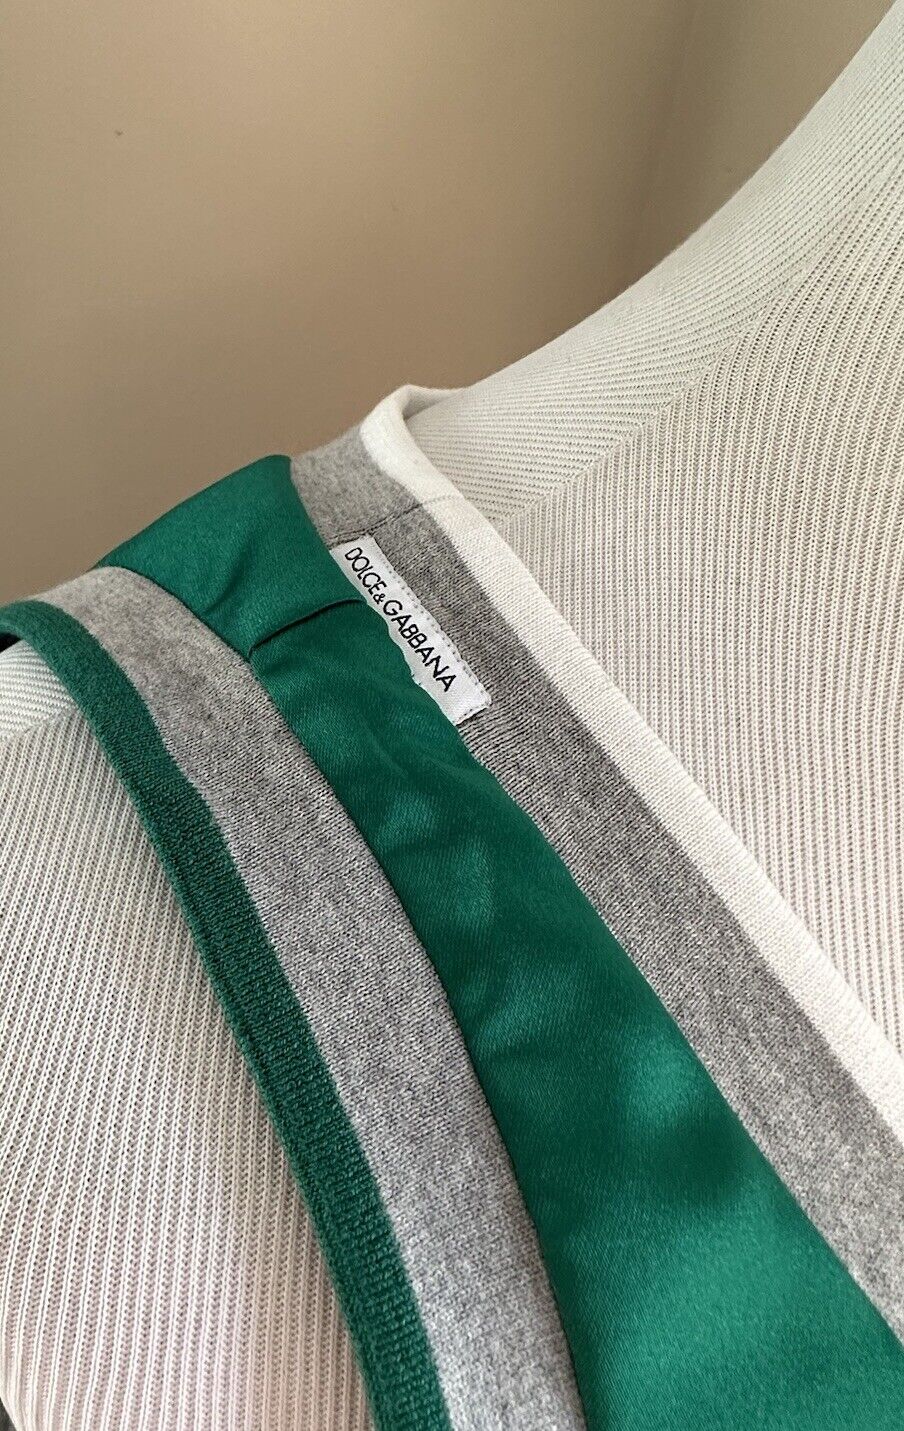 New $1295 Dolce&Gabbana Men’s Monogram Satin Jersey Tank Top Green/White/Red M